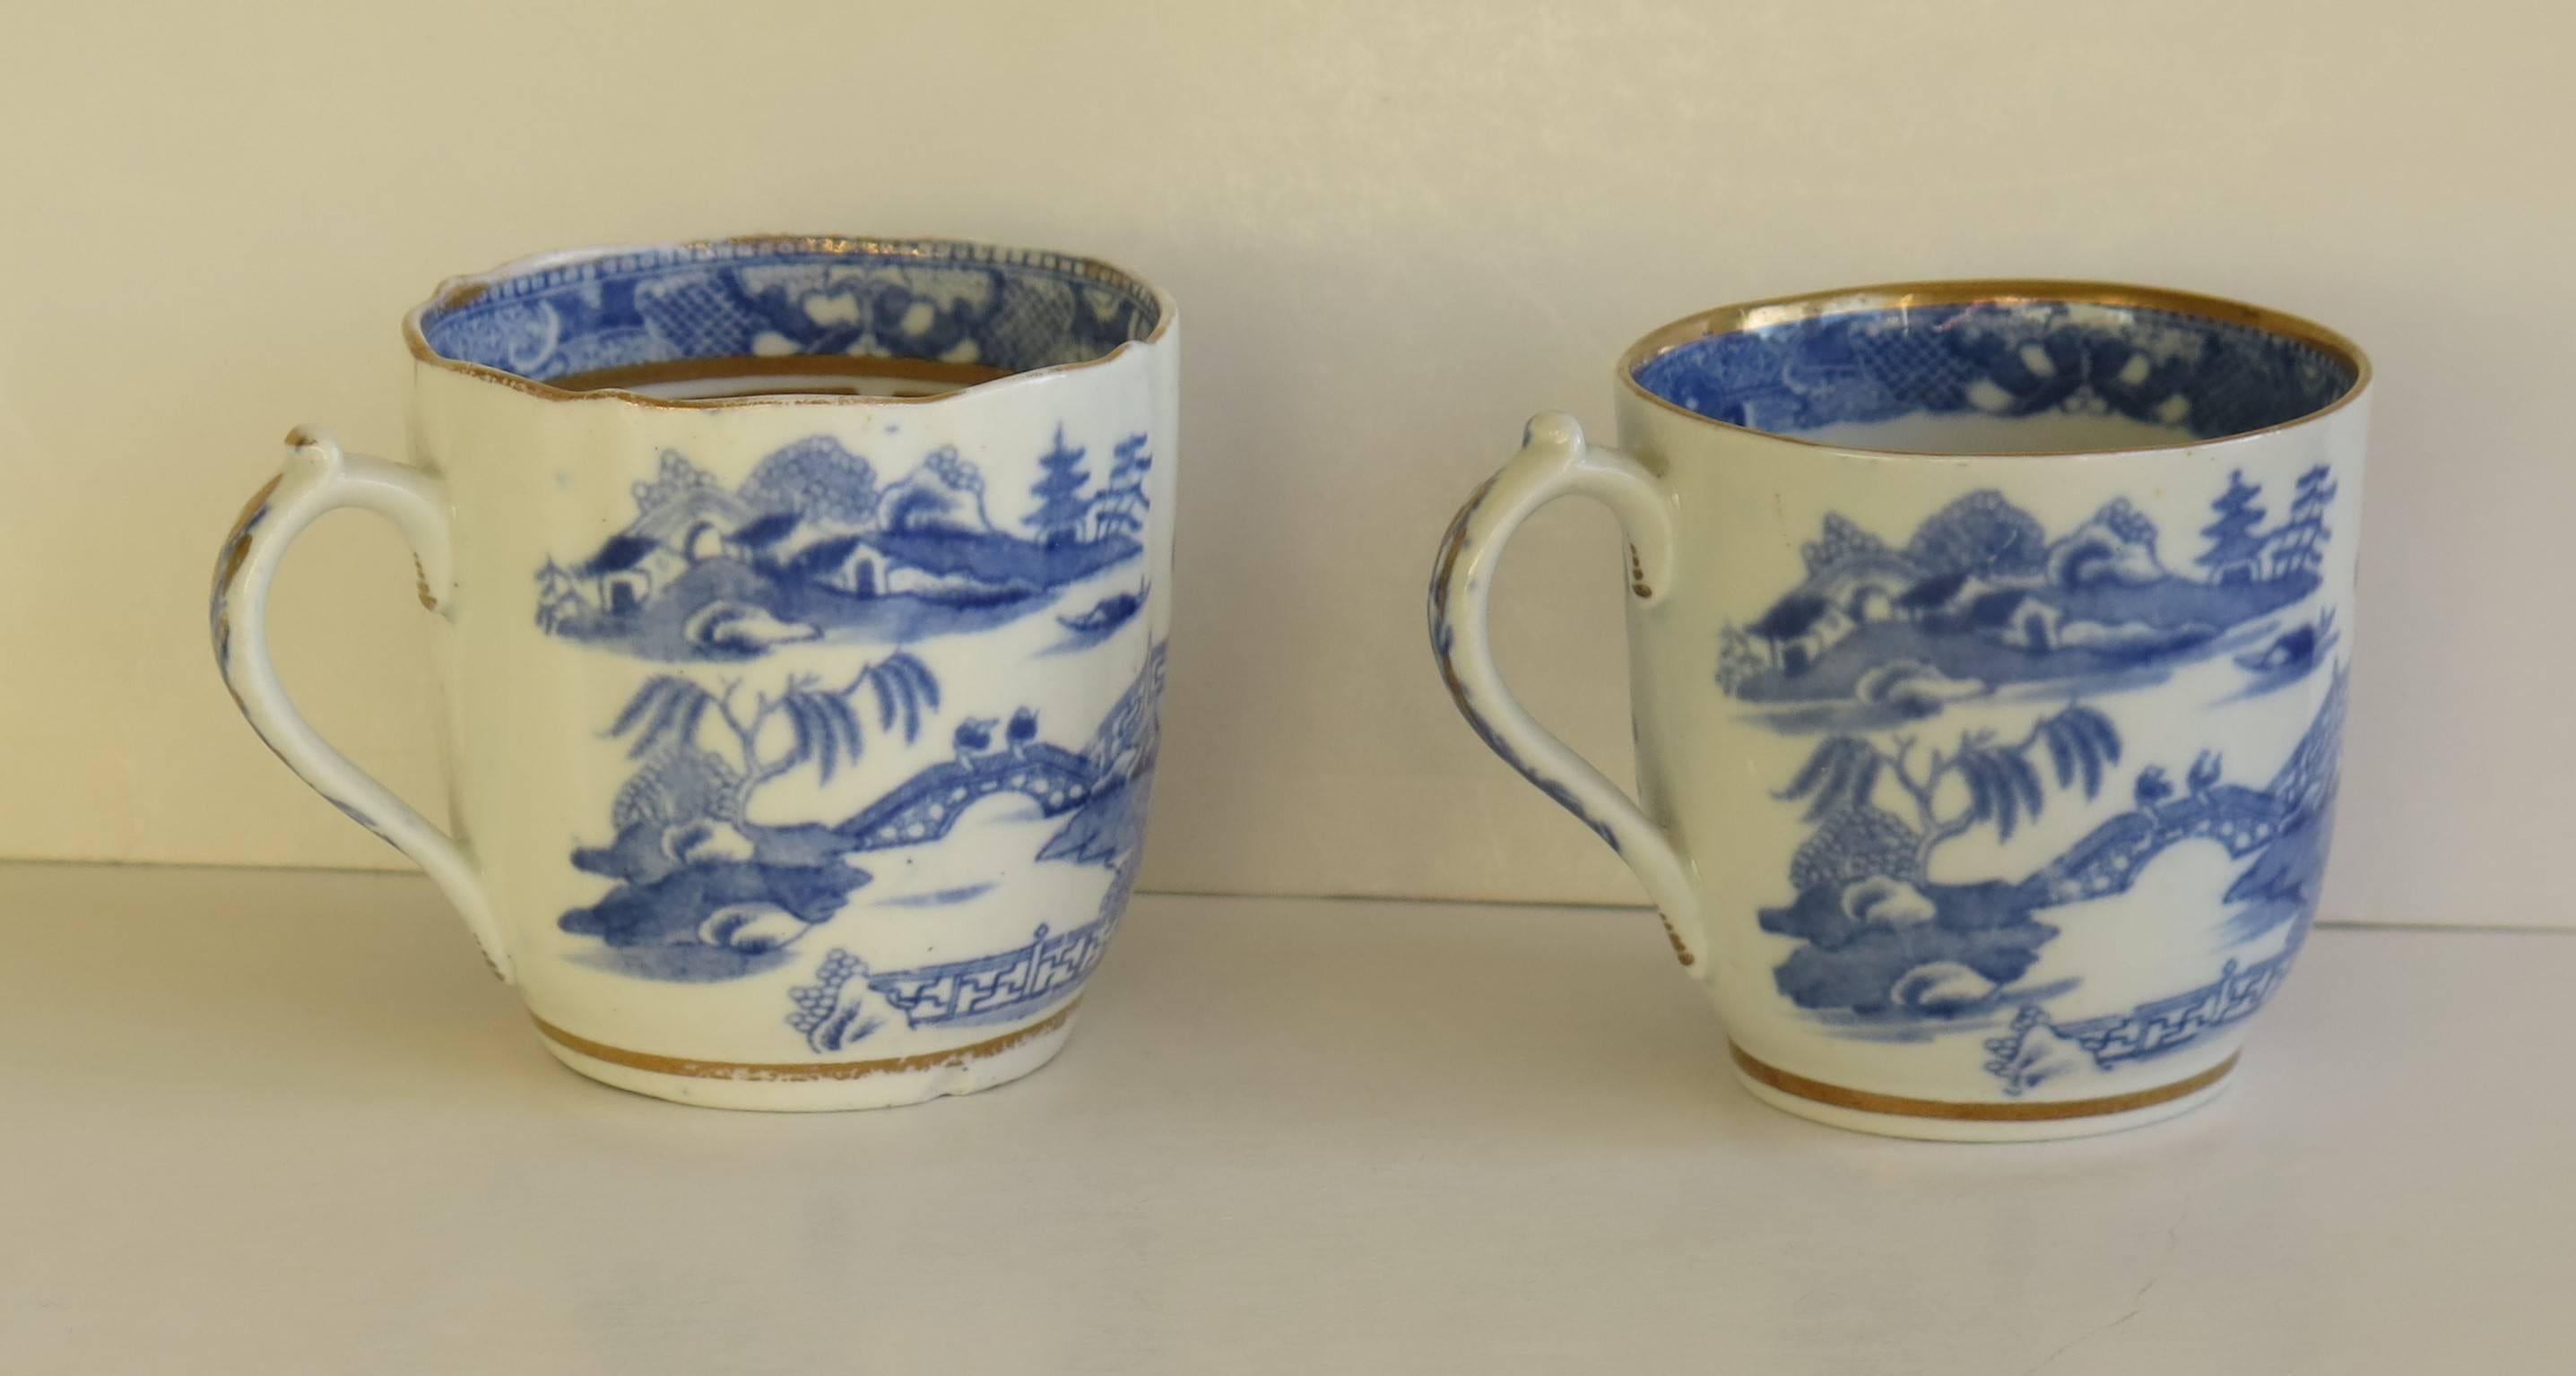 Glazed Similar PAIR of Miles Mason's Coffee Cans, Porcelain, Pagoda Pattern, circa 1800